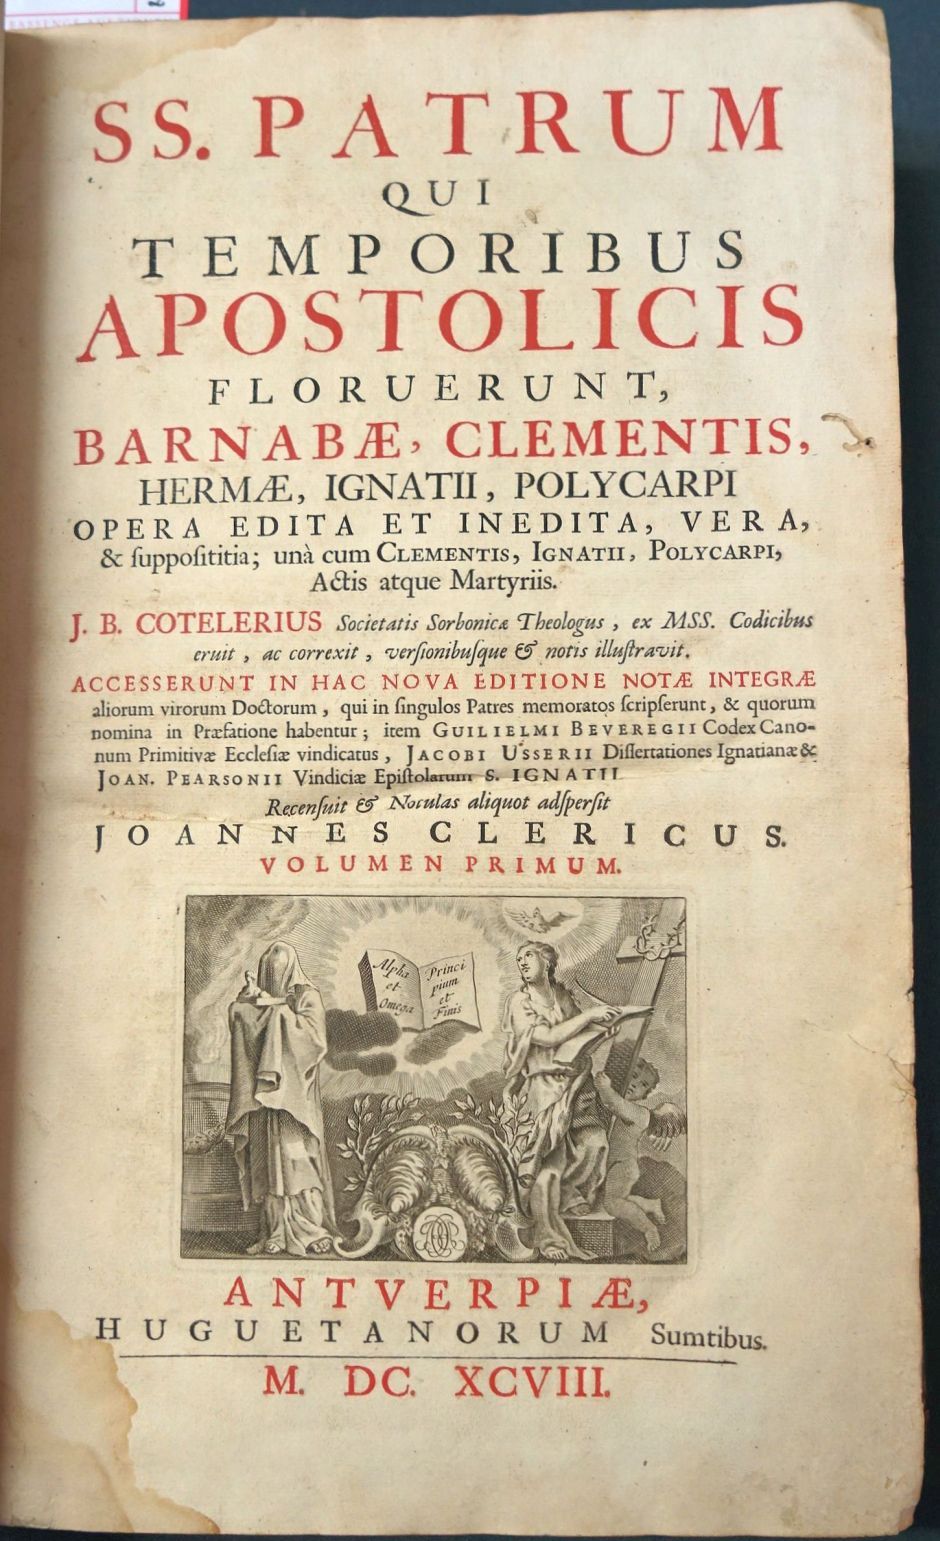 Lot 1263, Auction  115, Cotelier, Jean-Baptiste, SS. patrum, qui temporibus apostolicis floruerunt, Barnabae, Clementis, Hermae